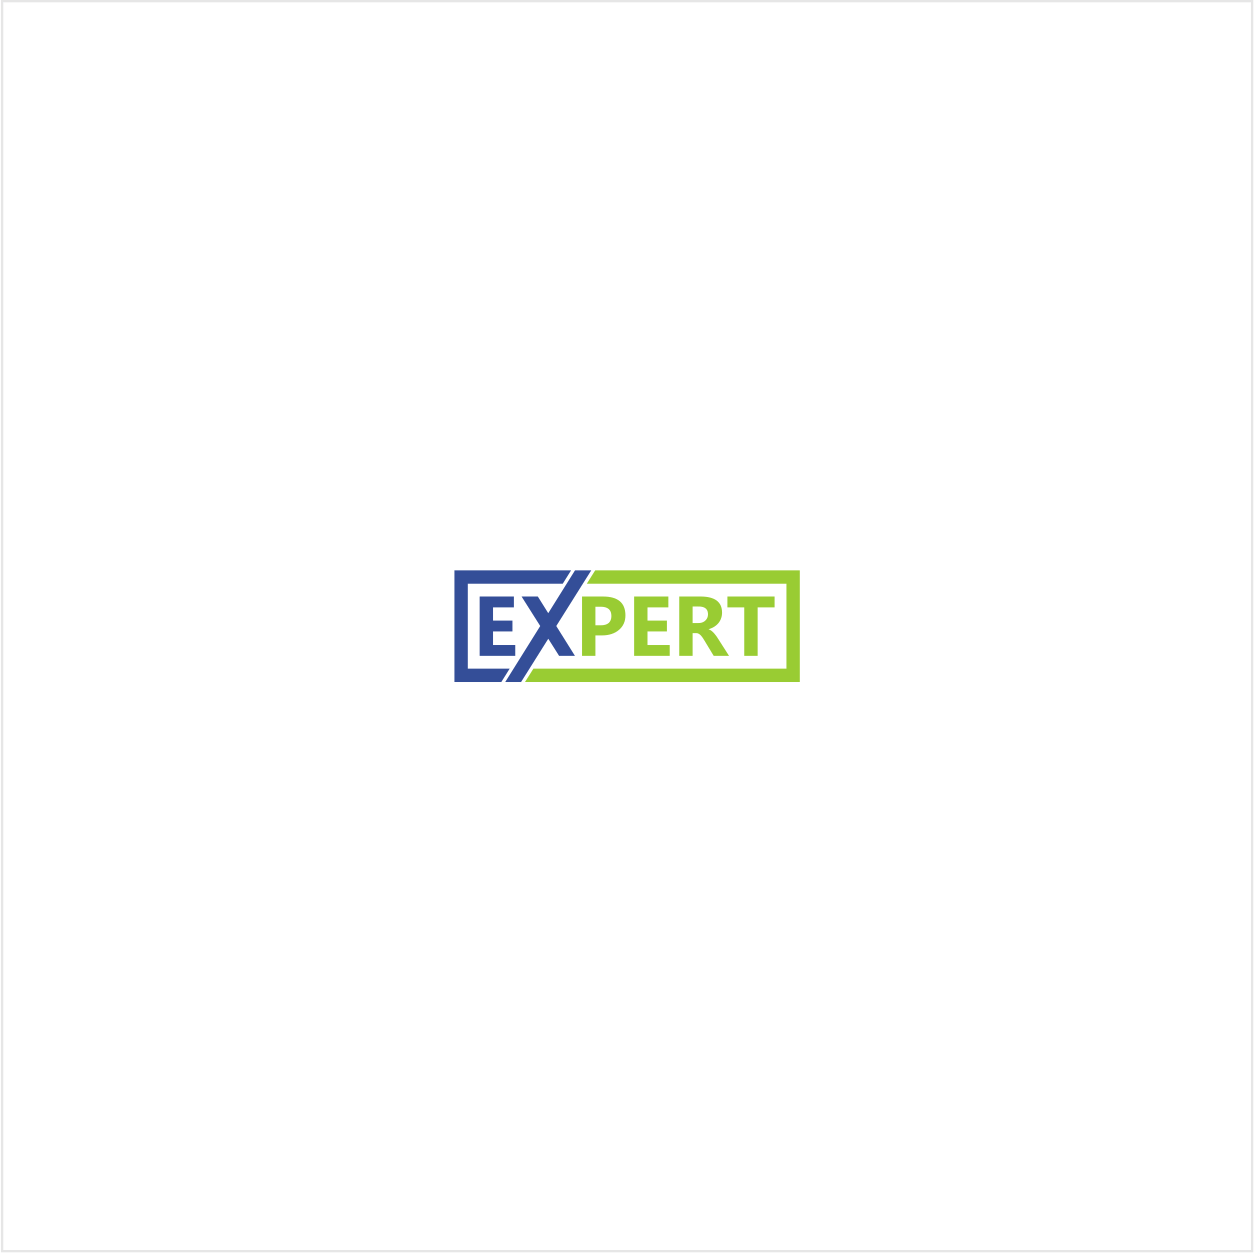 Expert Logo - Professional, Modern, It Company Logo Design for Expert